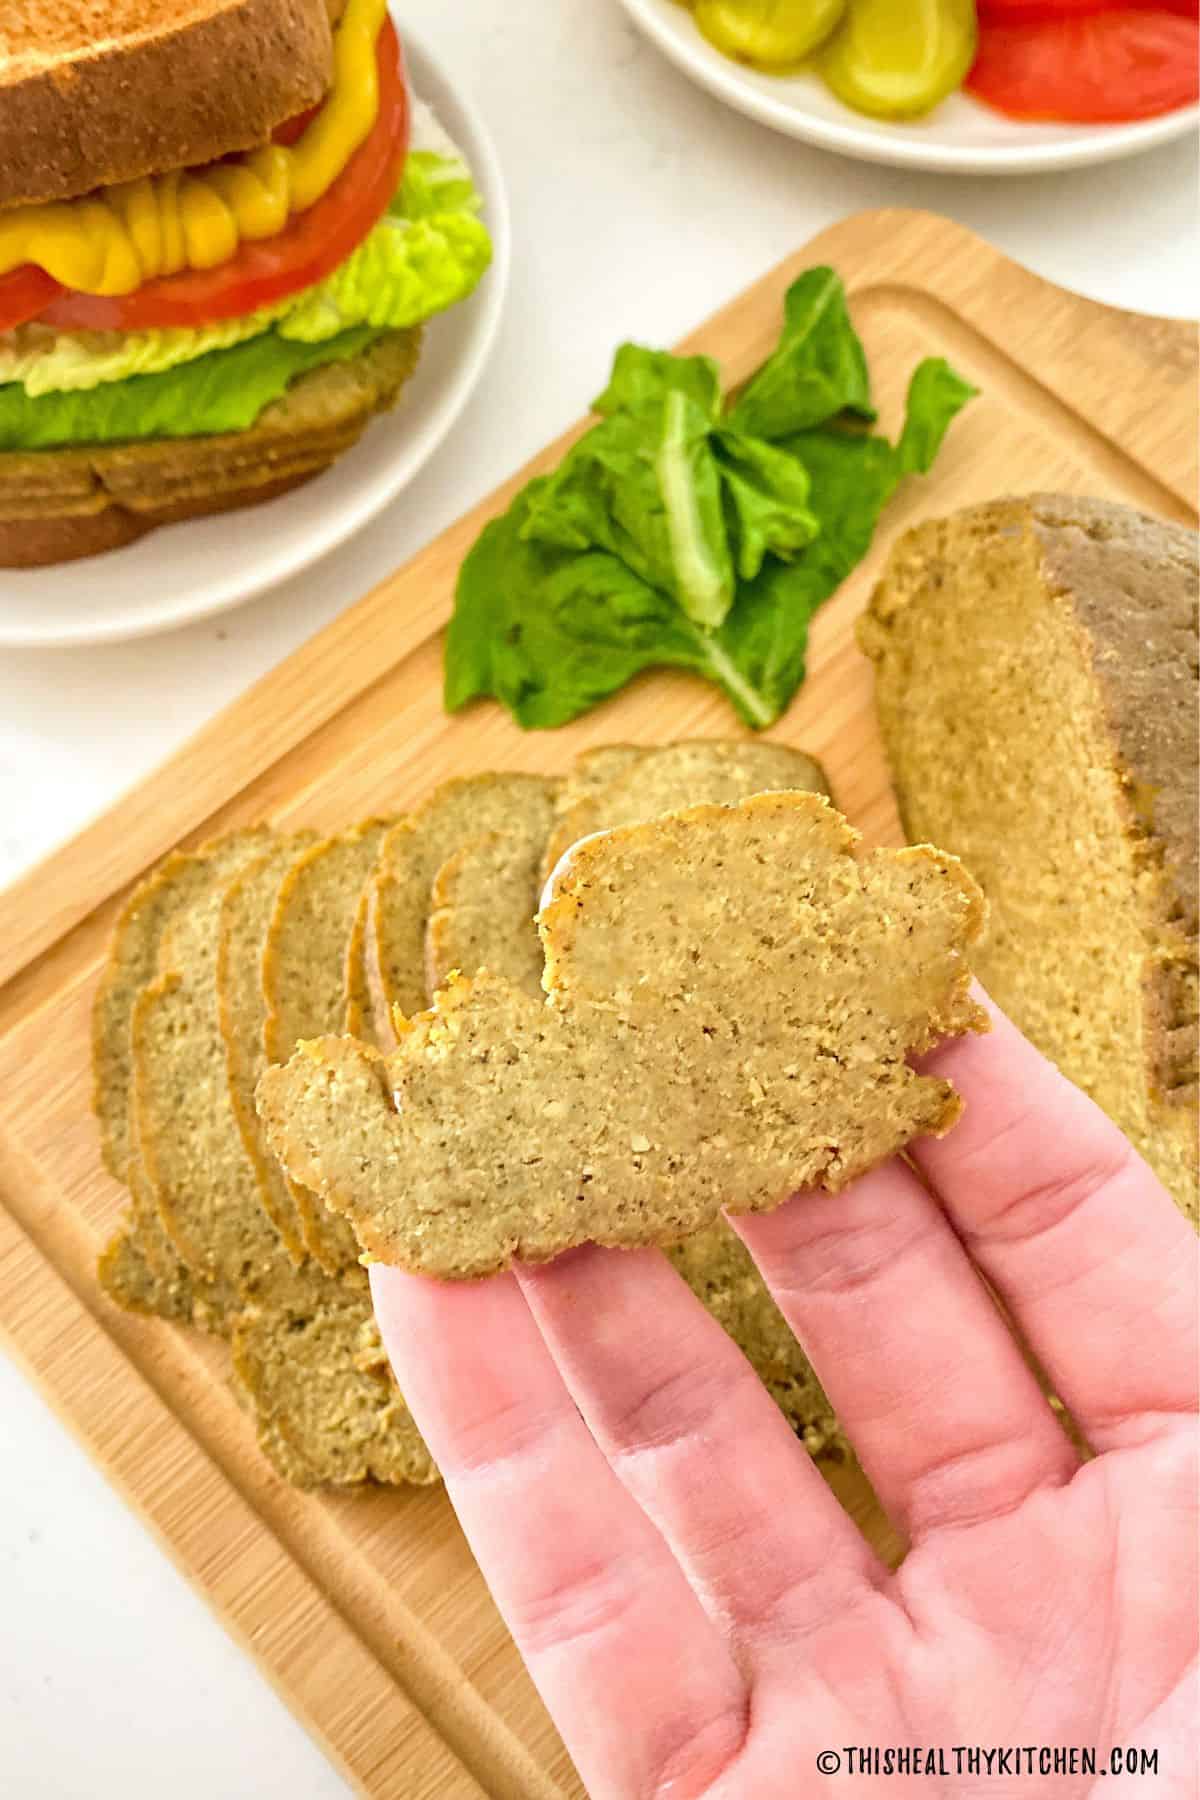 Hand holding up slice of vegan mock meat.